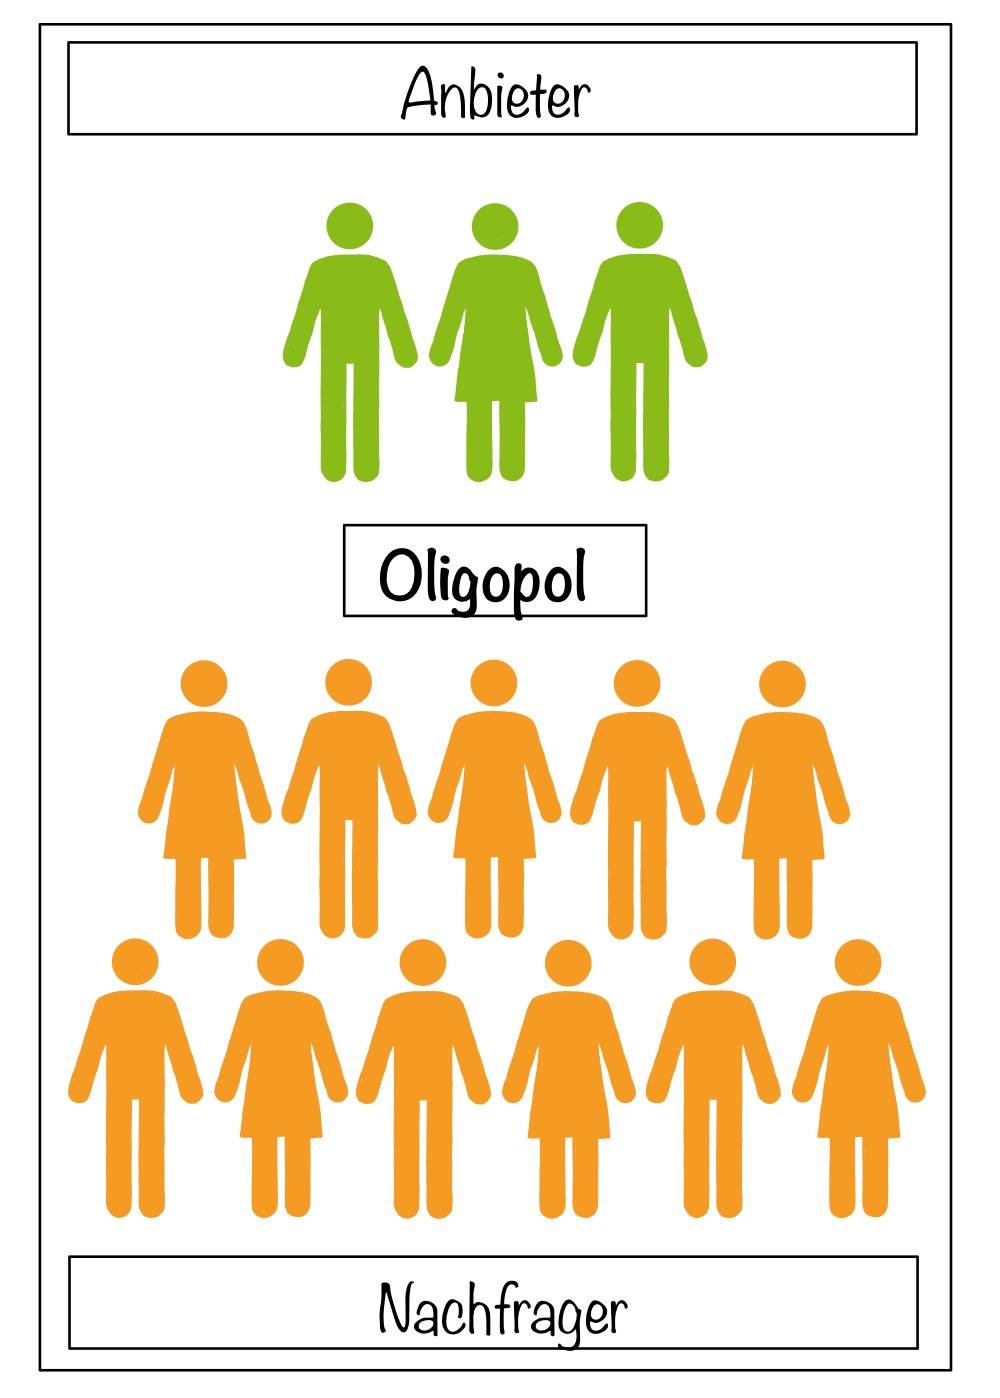 Piktogramm zum Oligopol-Markt